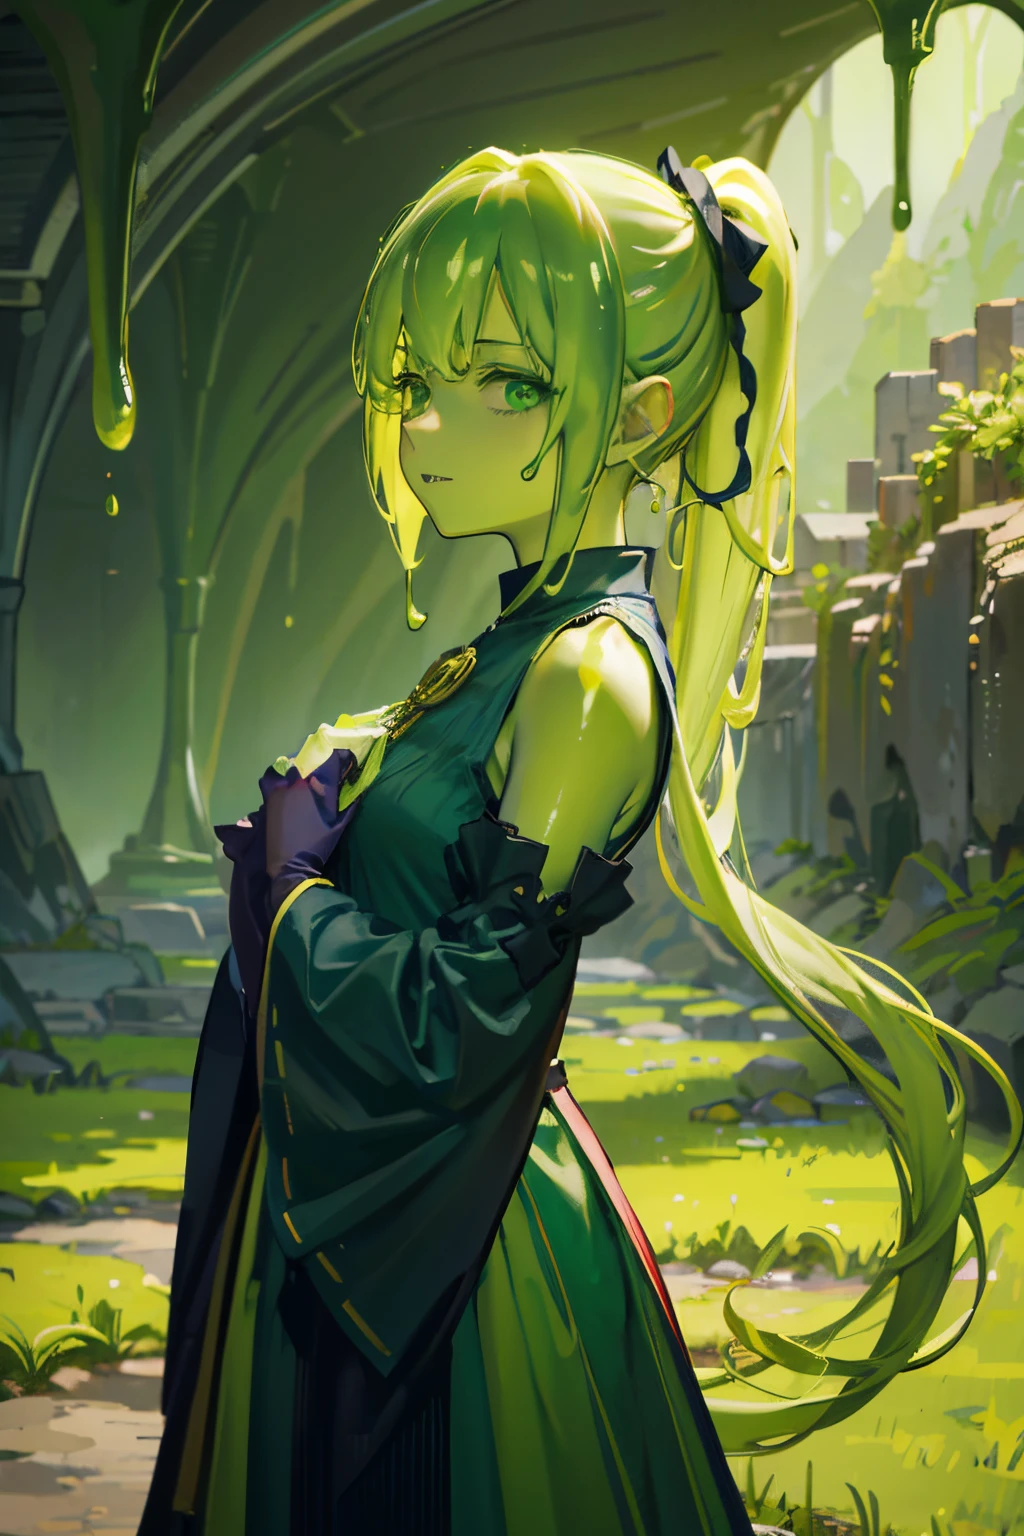 A أخضر slime girl, شعر ذيل حصان مزدوج, أخضر skin, أخضر, خلفية الكهف, ملابس القرون الوسطى, الوحش فتاة, تعبير سعيد, عيون فارغة,